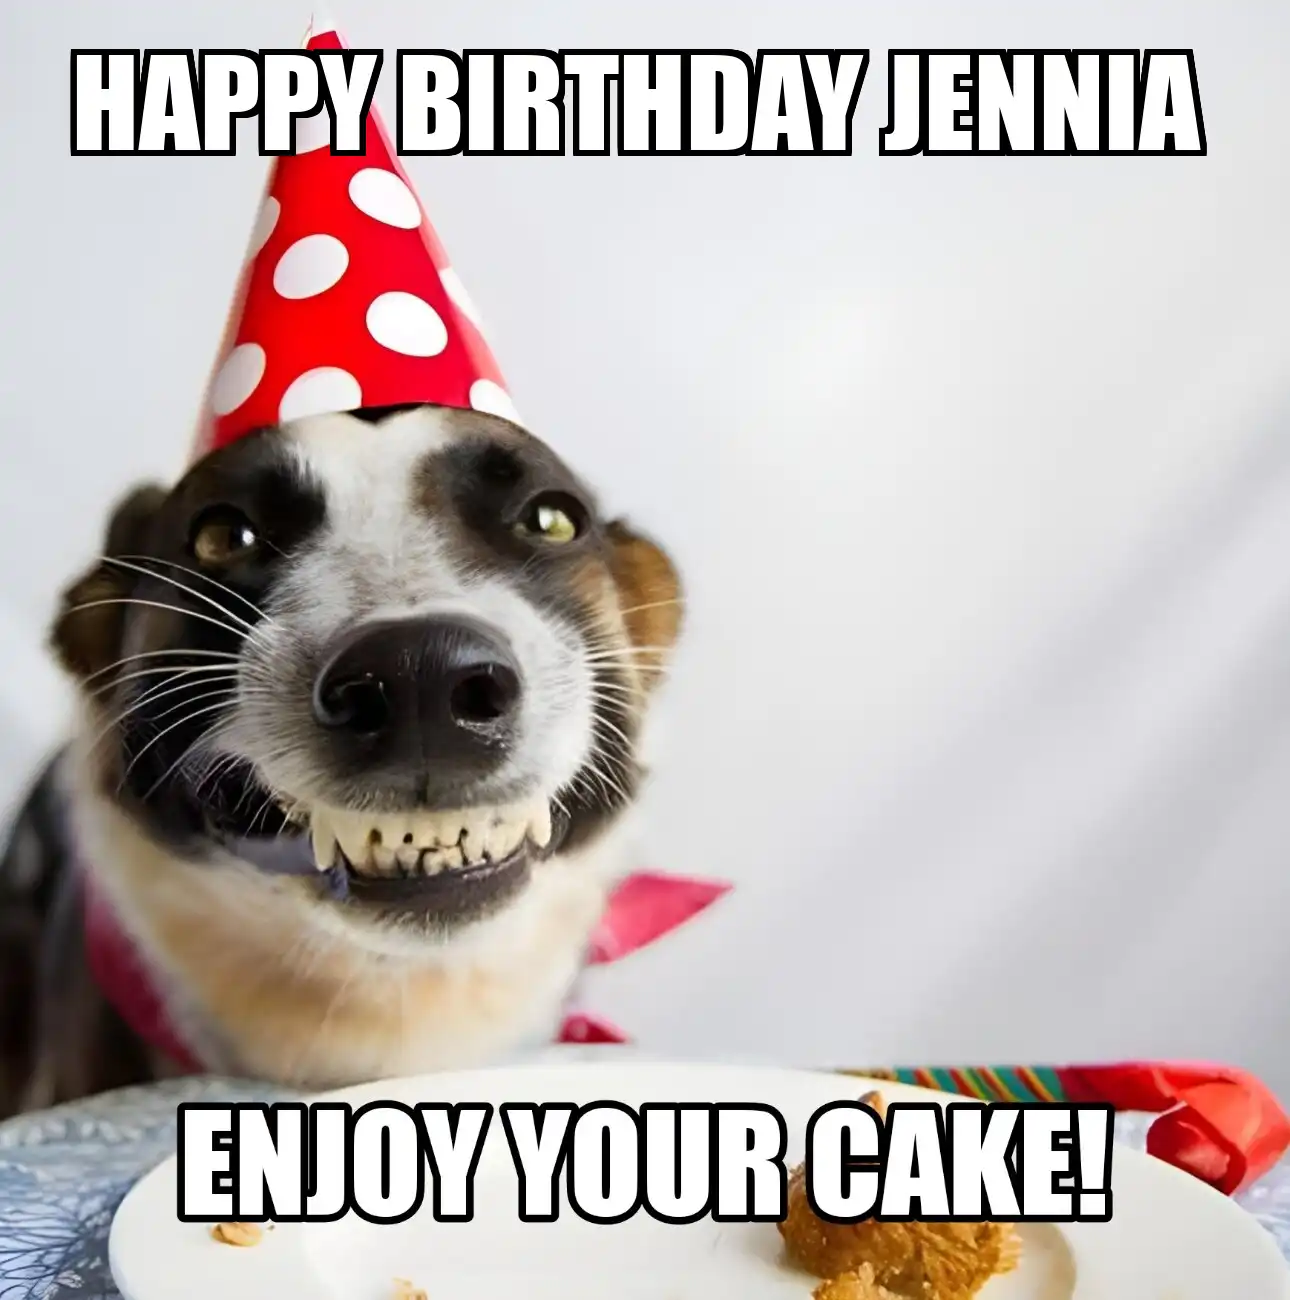 Happy Birthday Jennia Enjoy Your Cake Dog Meme